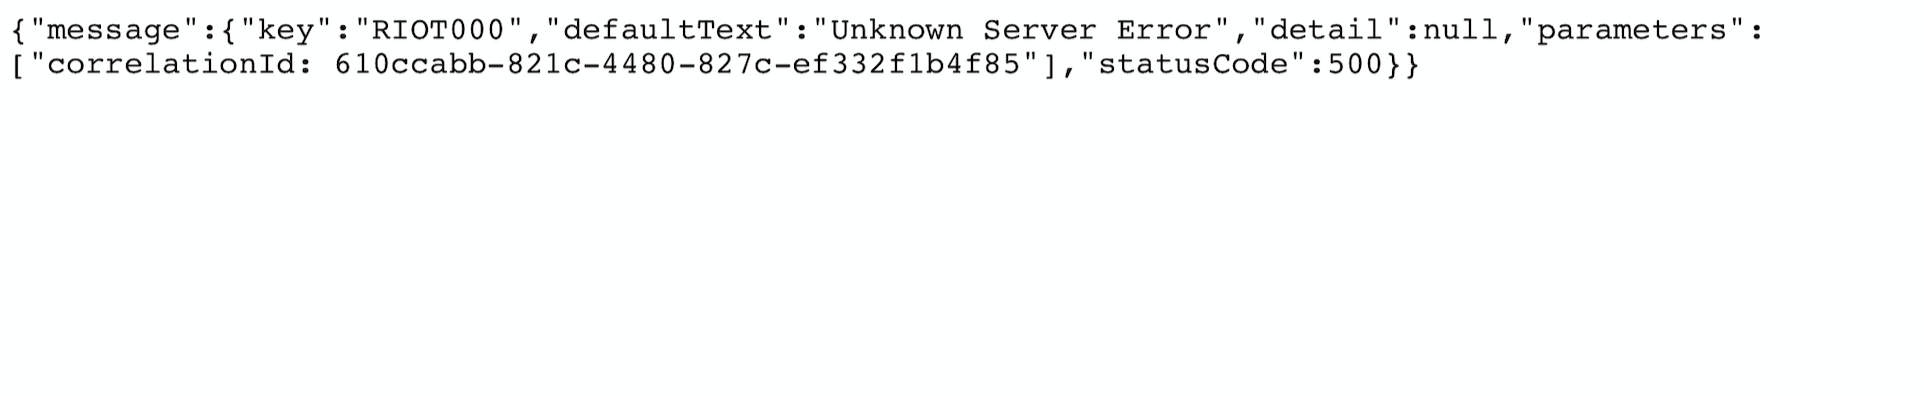 HTTP 500 Error